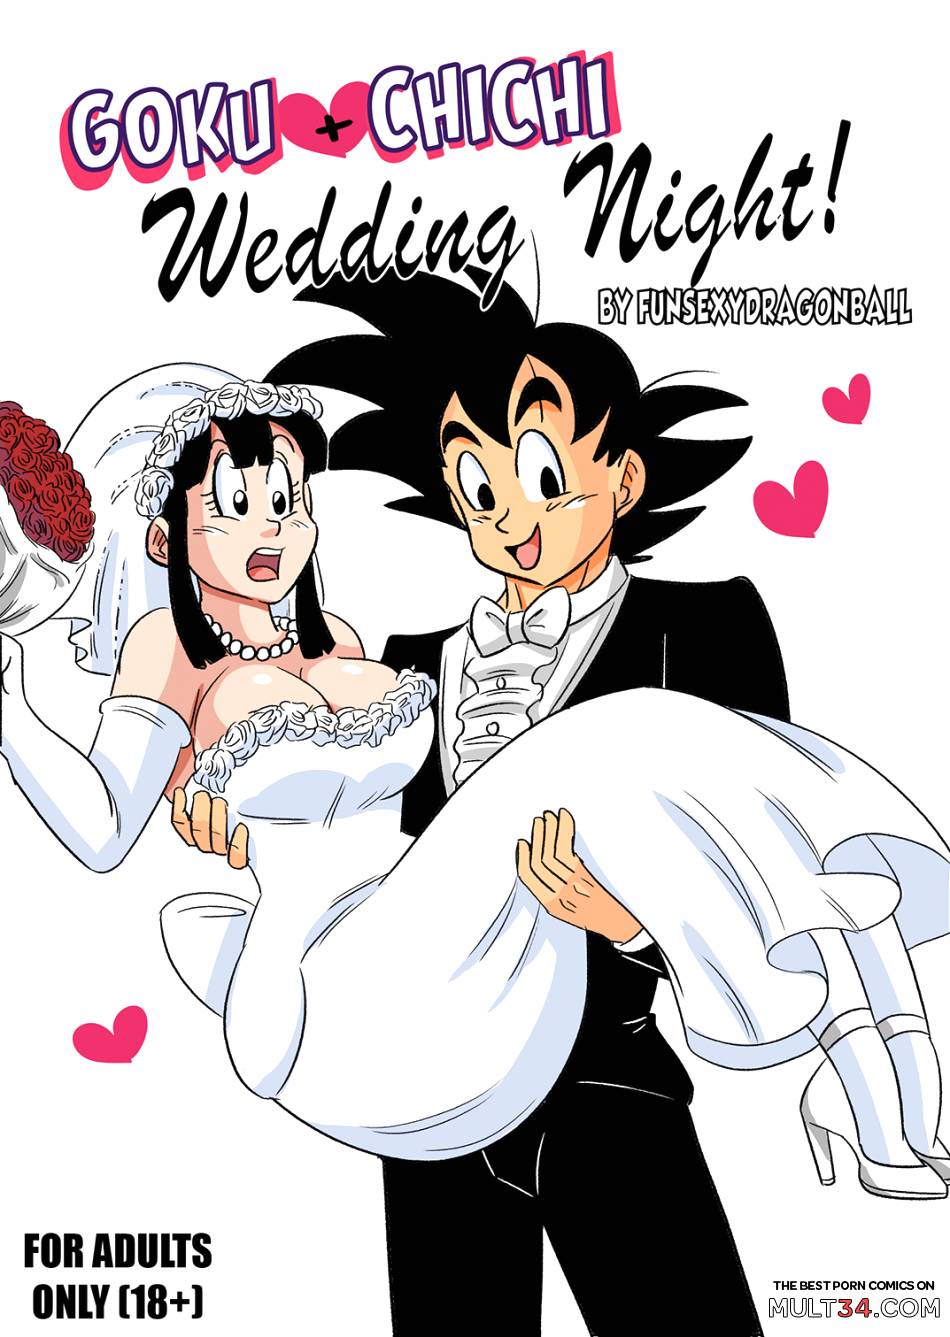 Wedding Cheating Cartoon Porn - Dragon Ball porn comics, cartoon porn comics, Rule 34